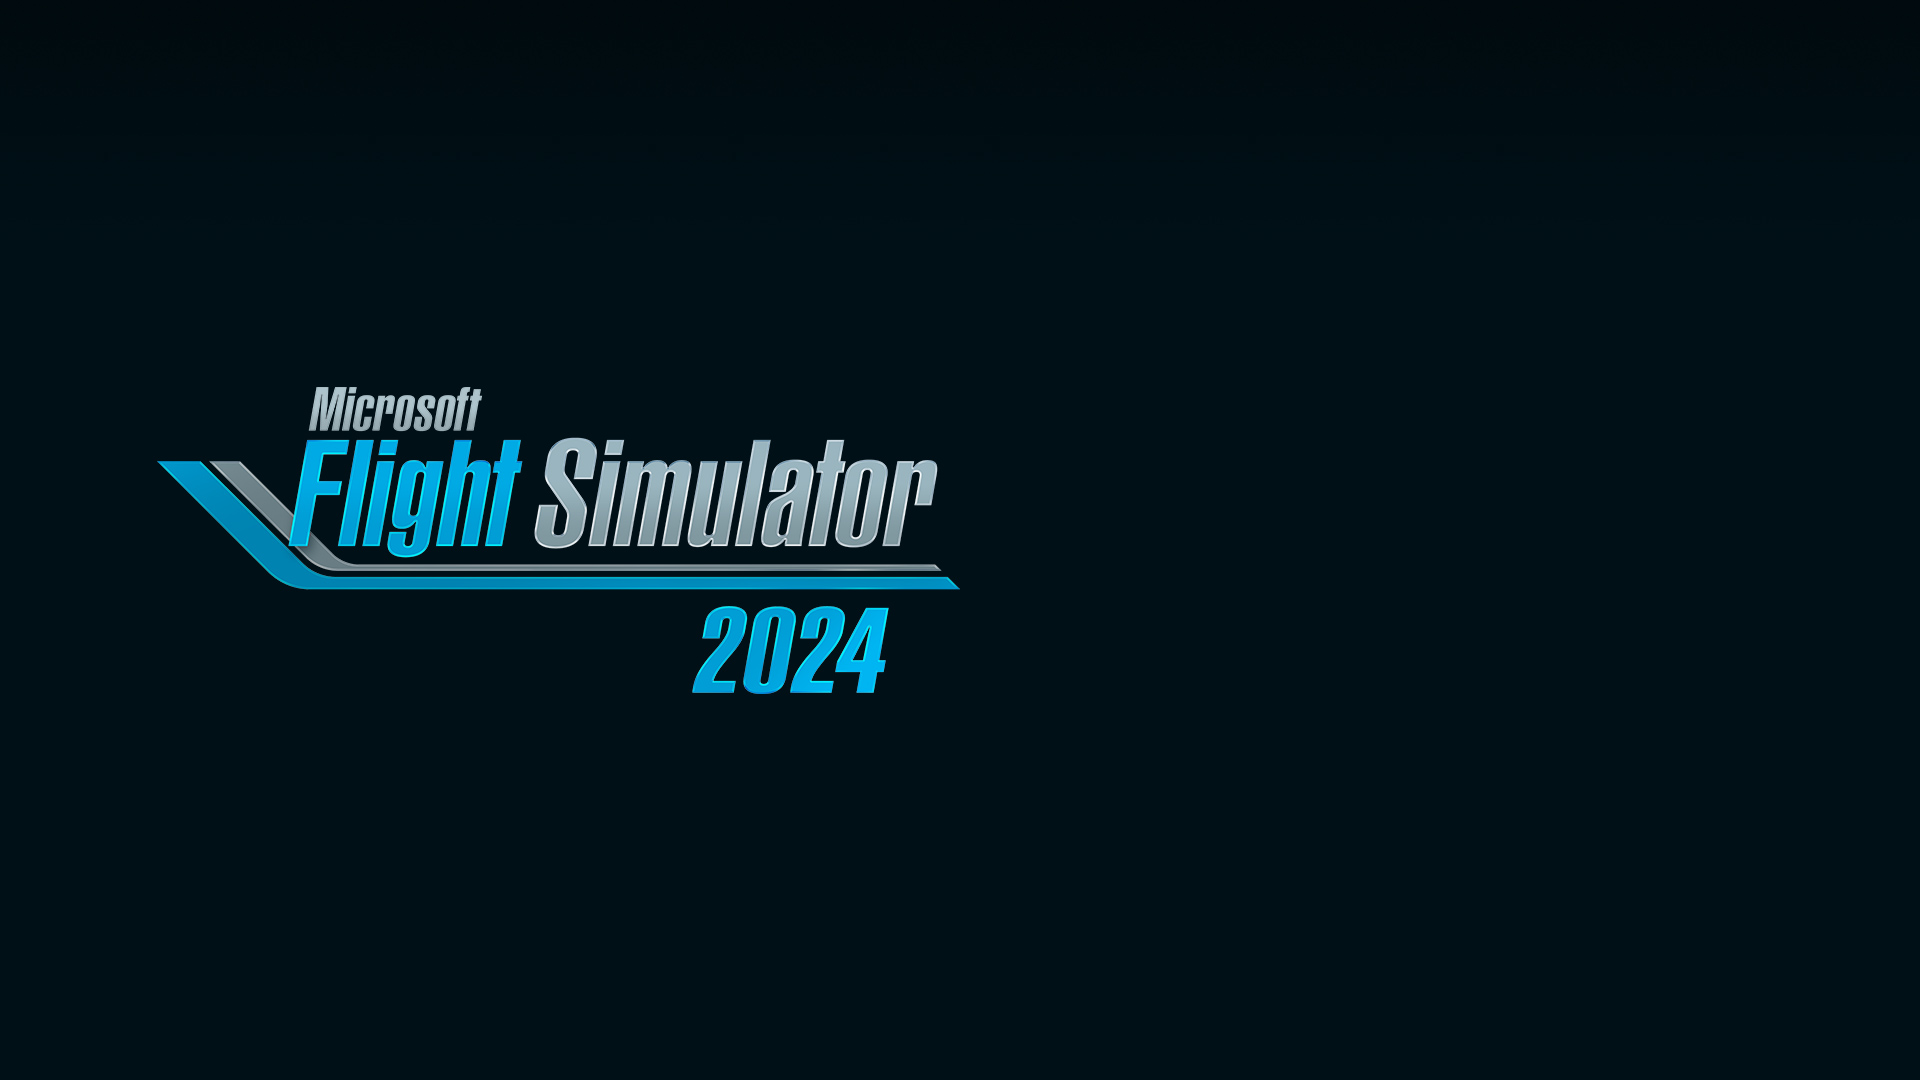 Microsoft Flight Simulator 2024 Logo.